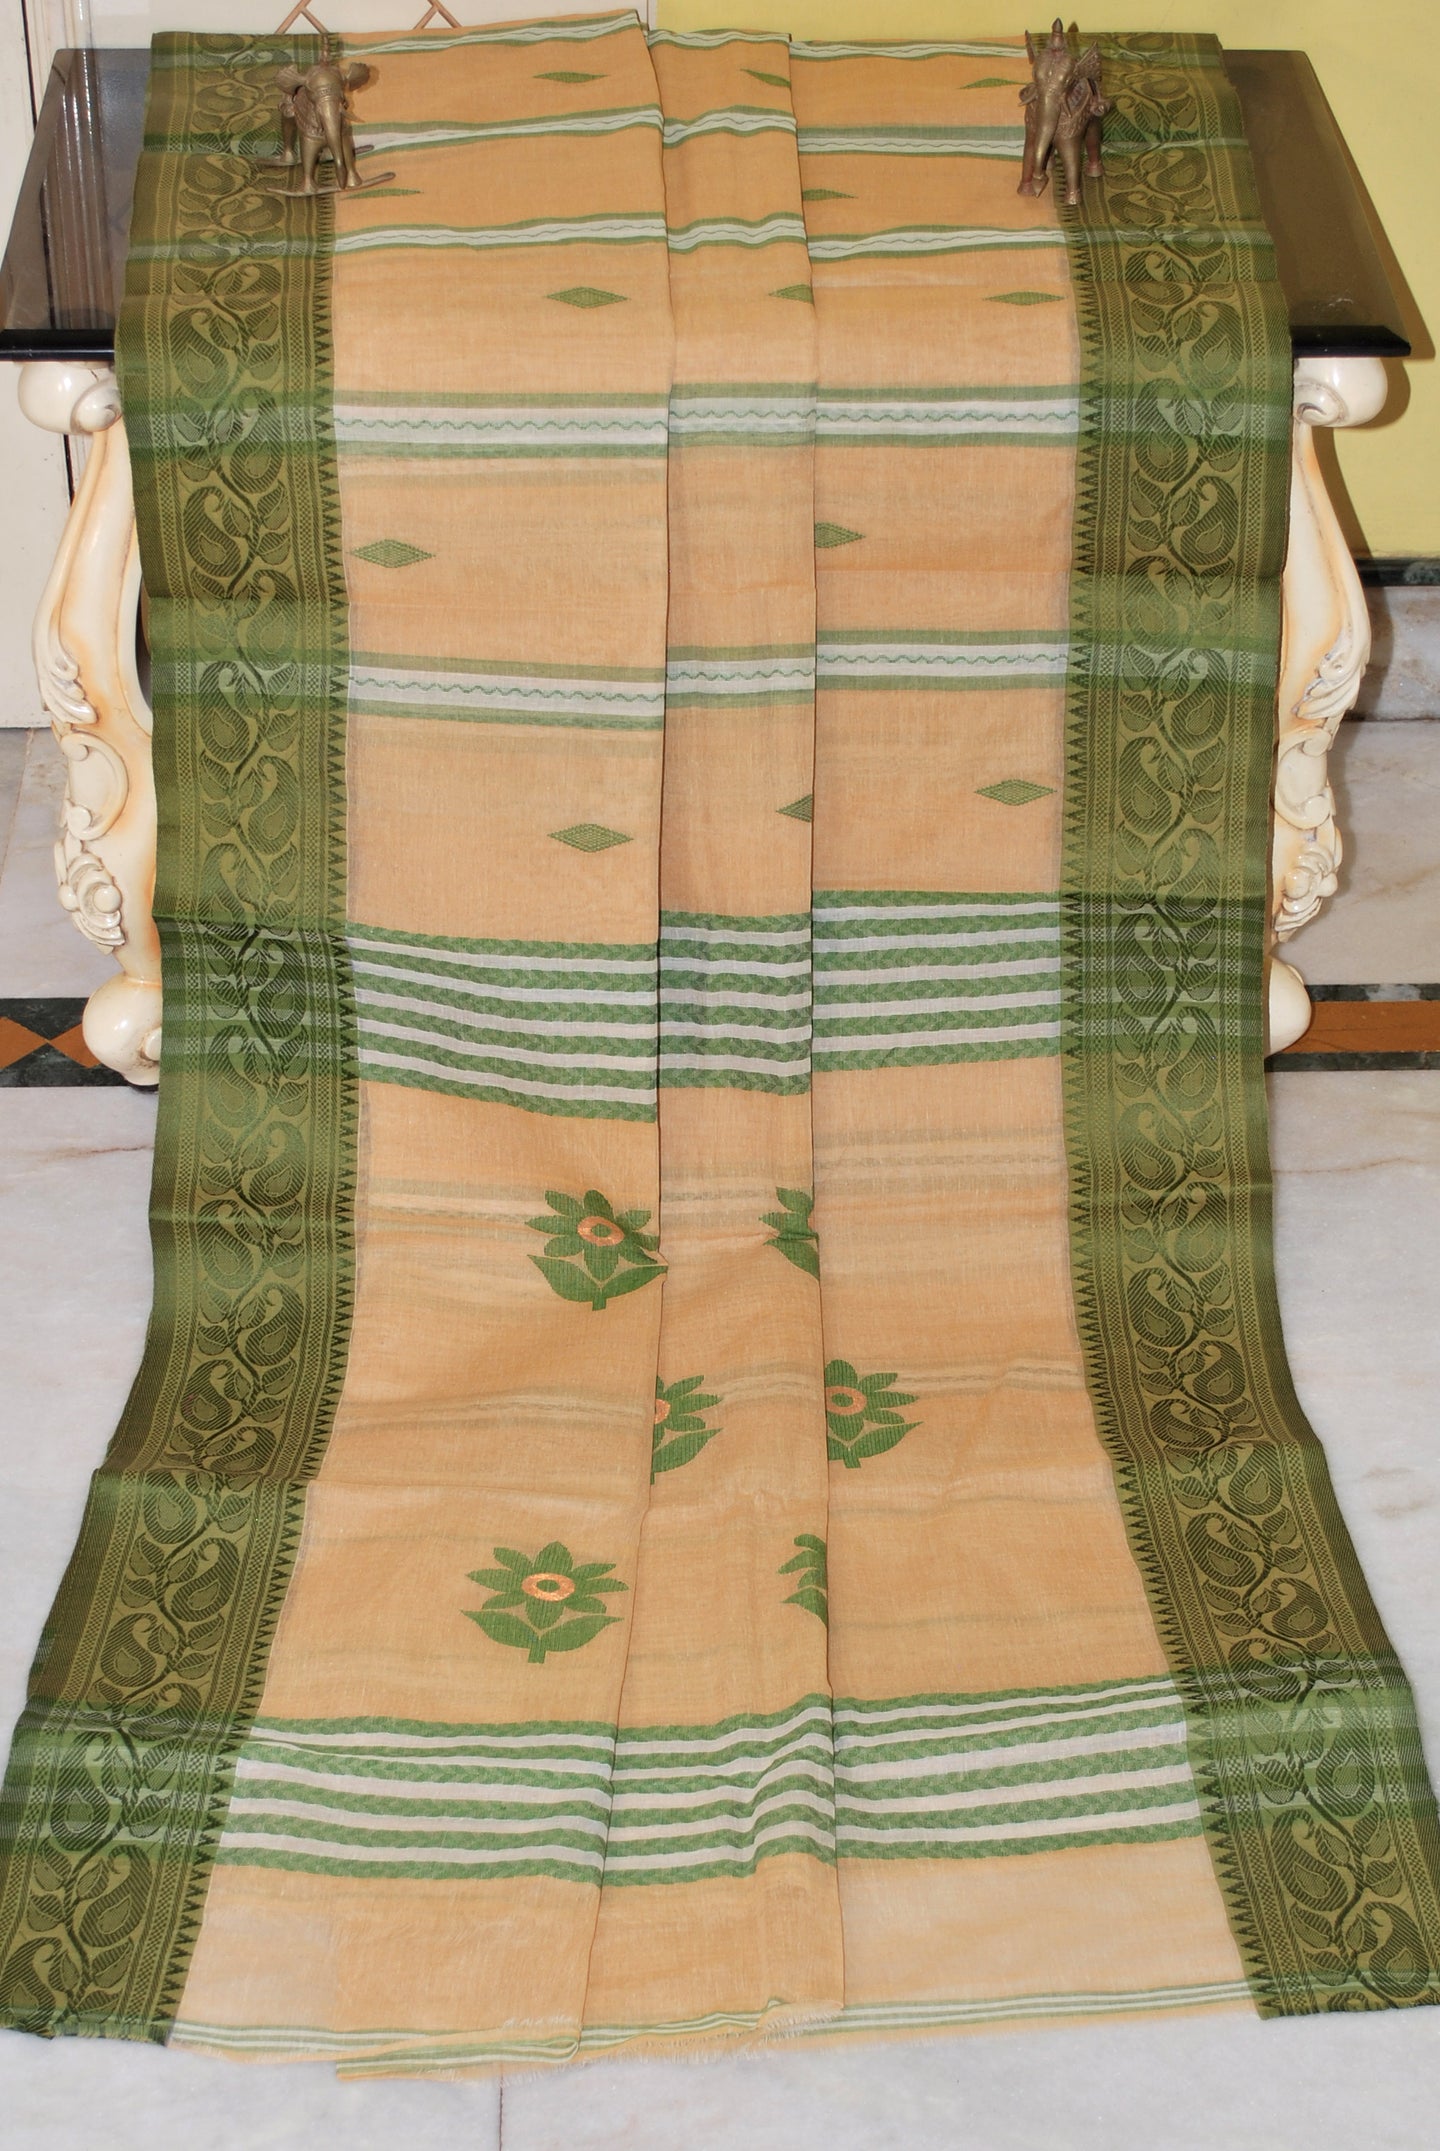 Sil Nakshi Border Bengal Handloom Cotton Bomkai Saree in Khaki, Off White and Moss Green Thread Work